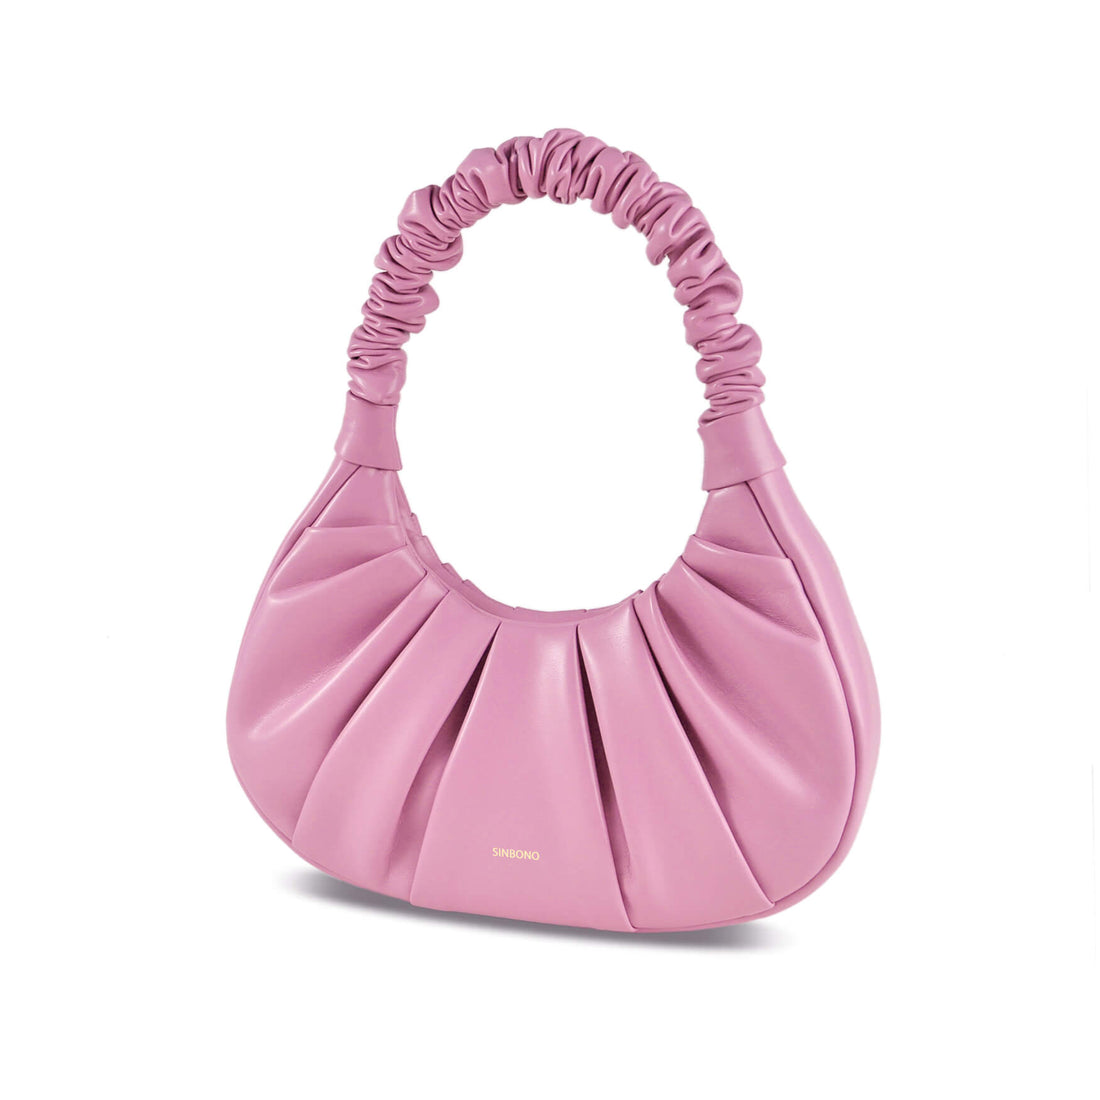 SINBONO Ava Vegan Handbag Pink